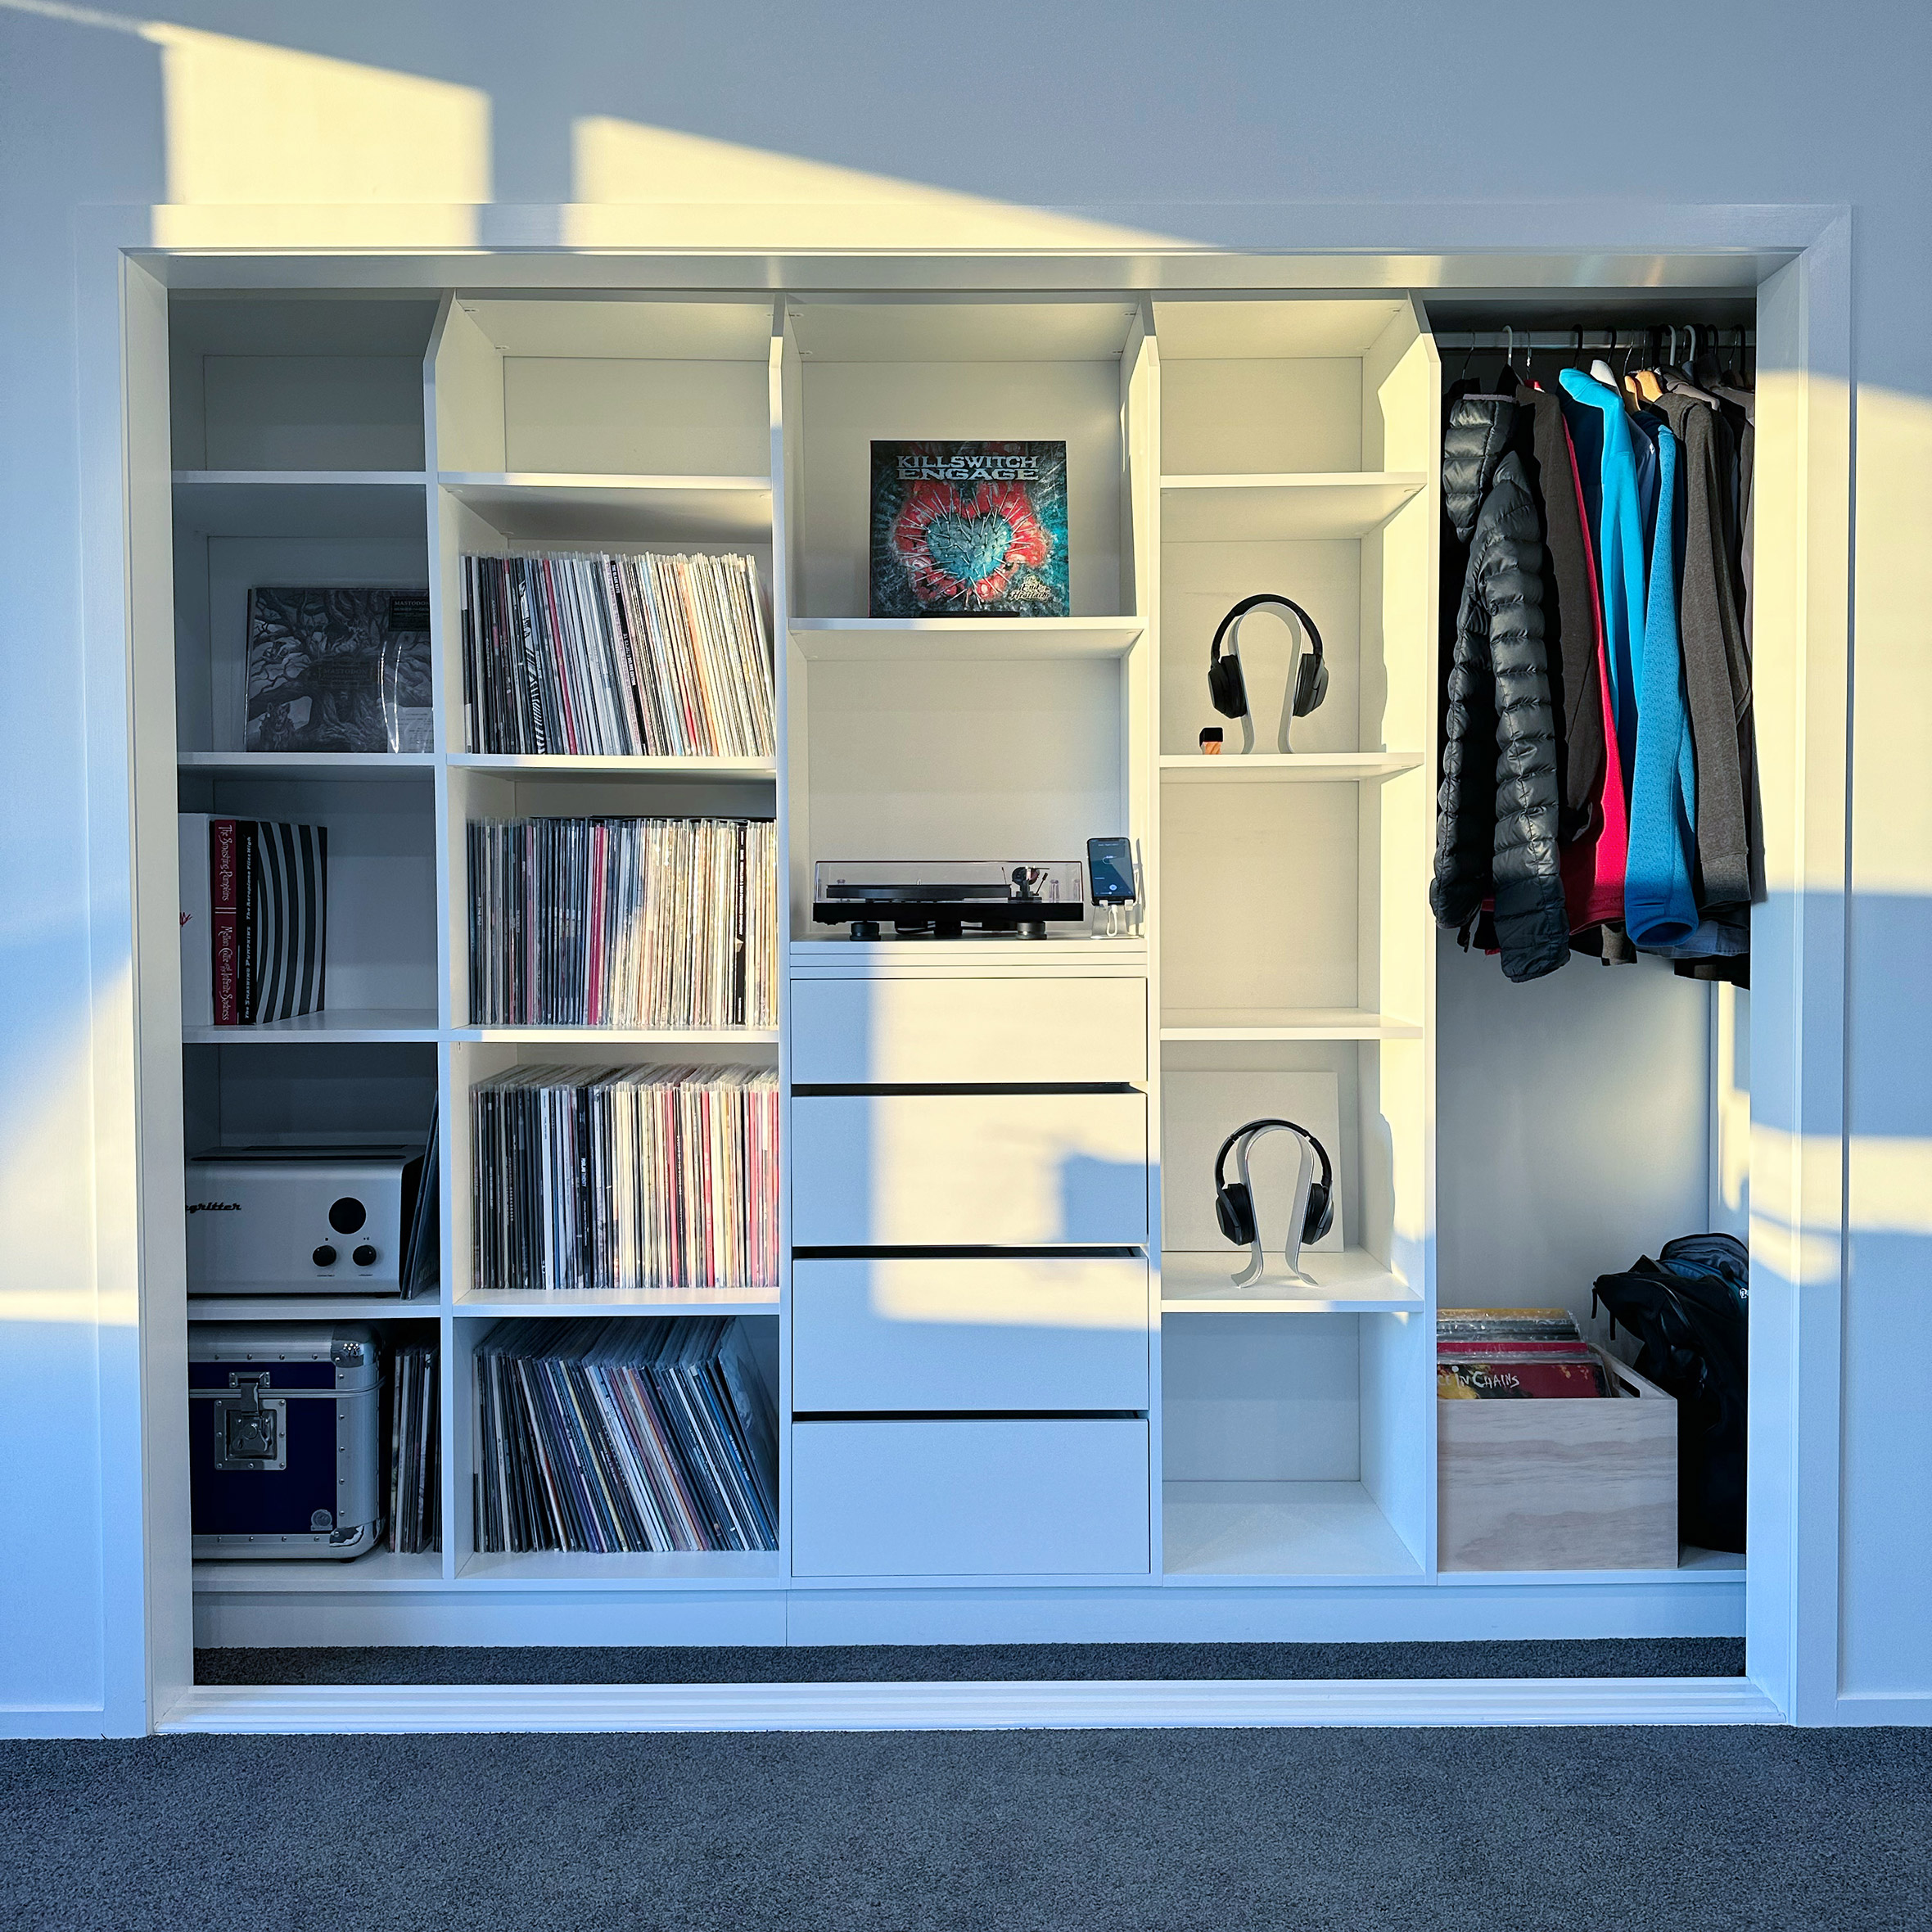 record-player-closet